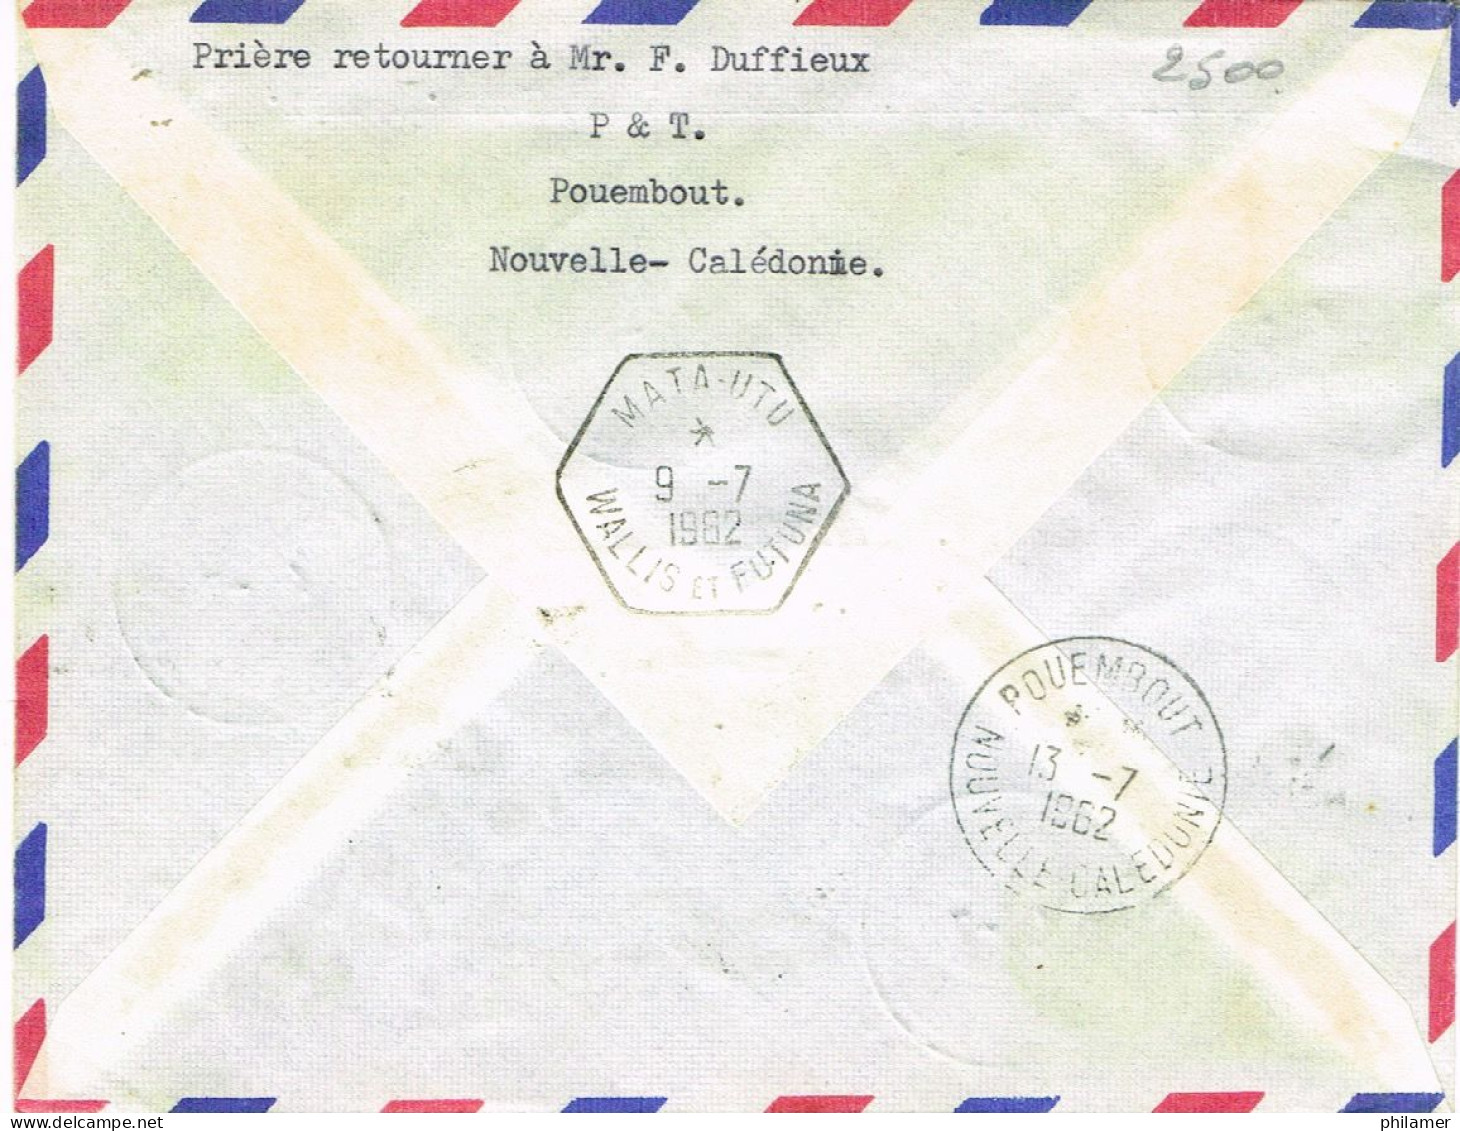 Wallis Futuna Nouvelle Caledonie FFC Premier Vol Aerien Noumea Mata Utu 4/7/62 Us Courant - Cartas & Documentos